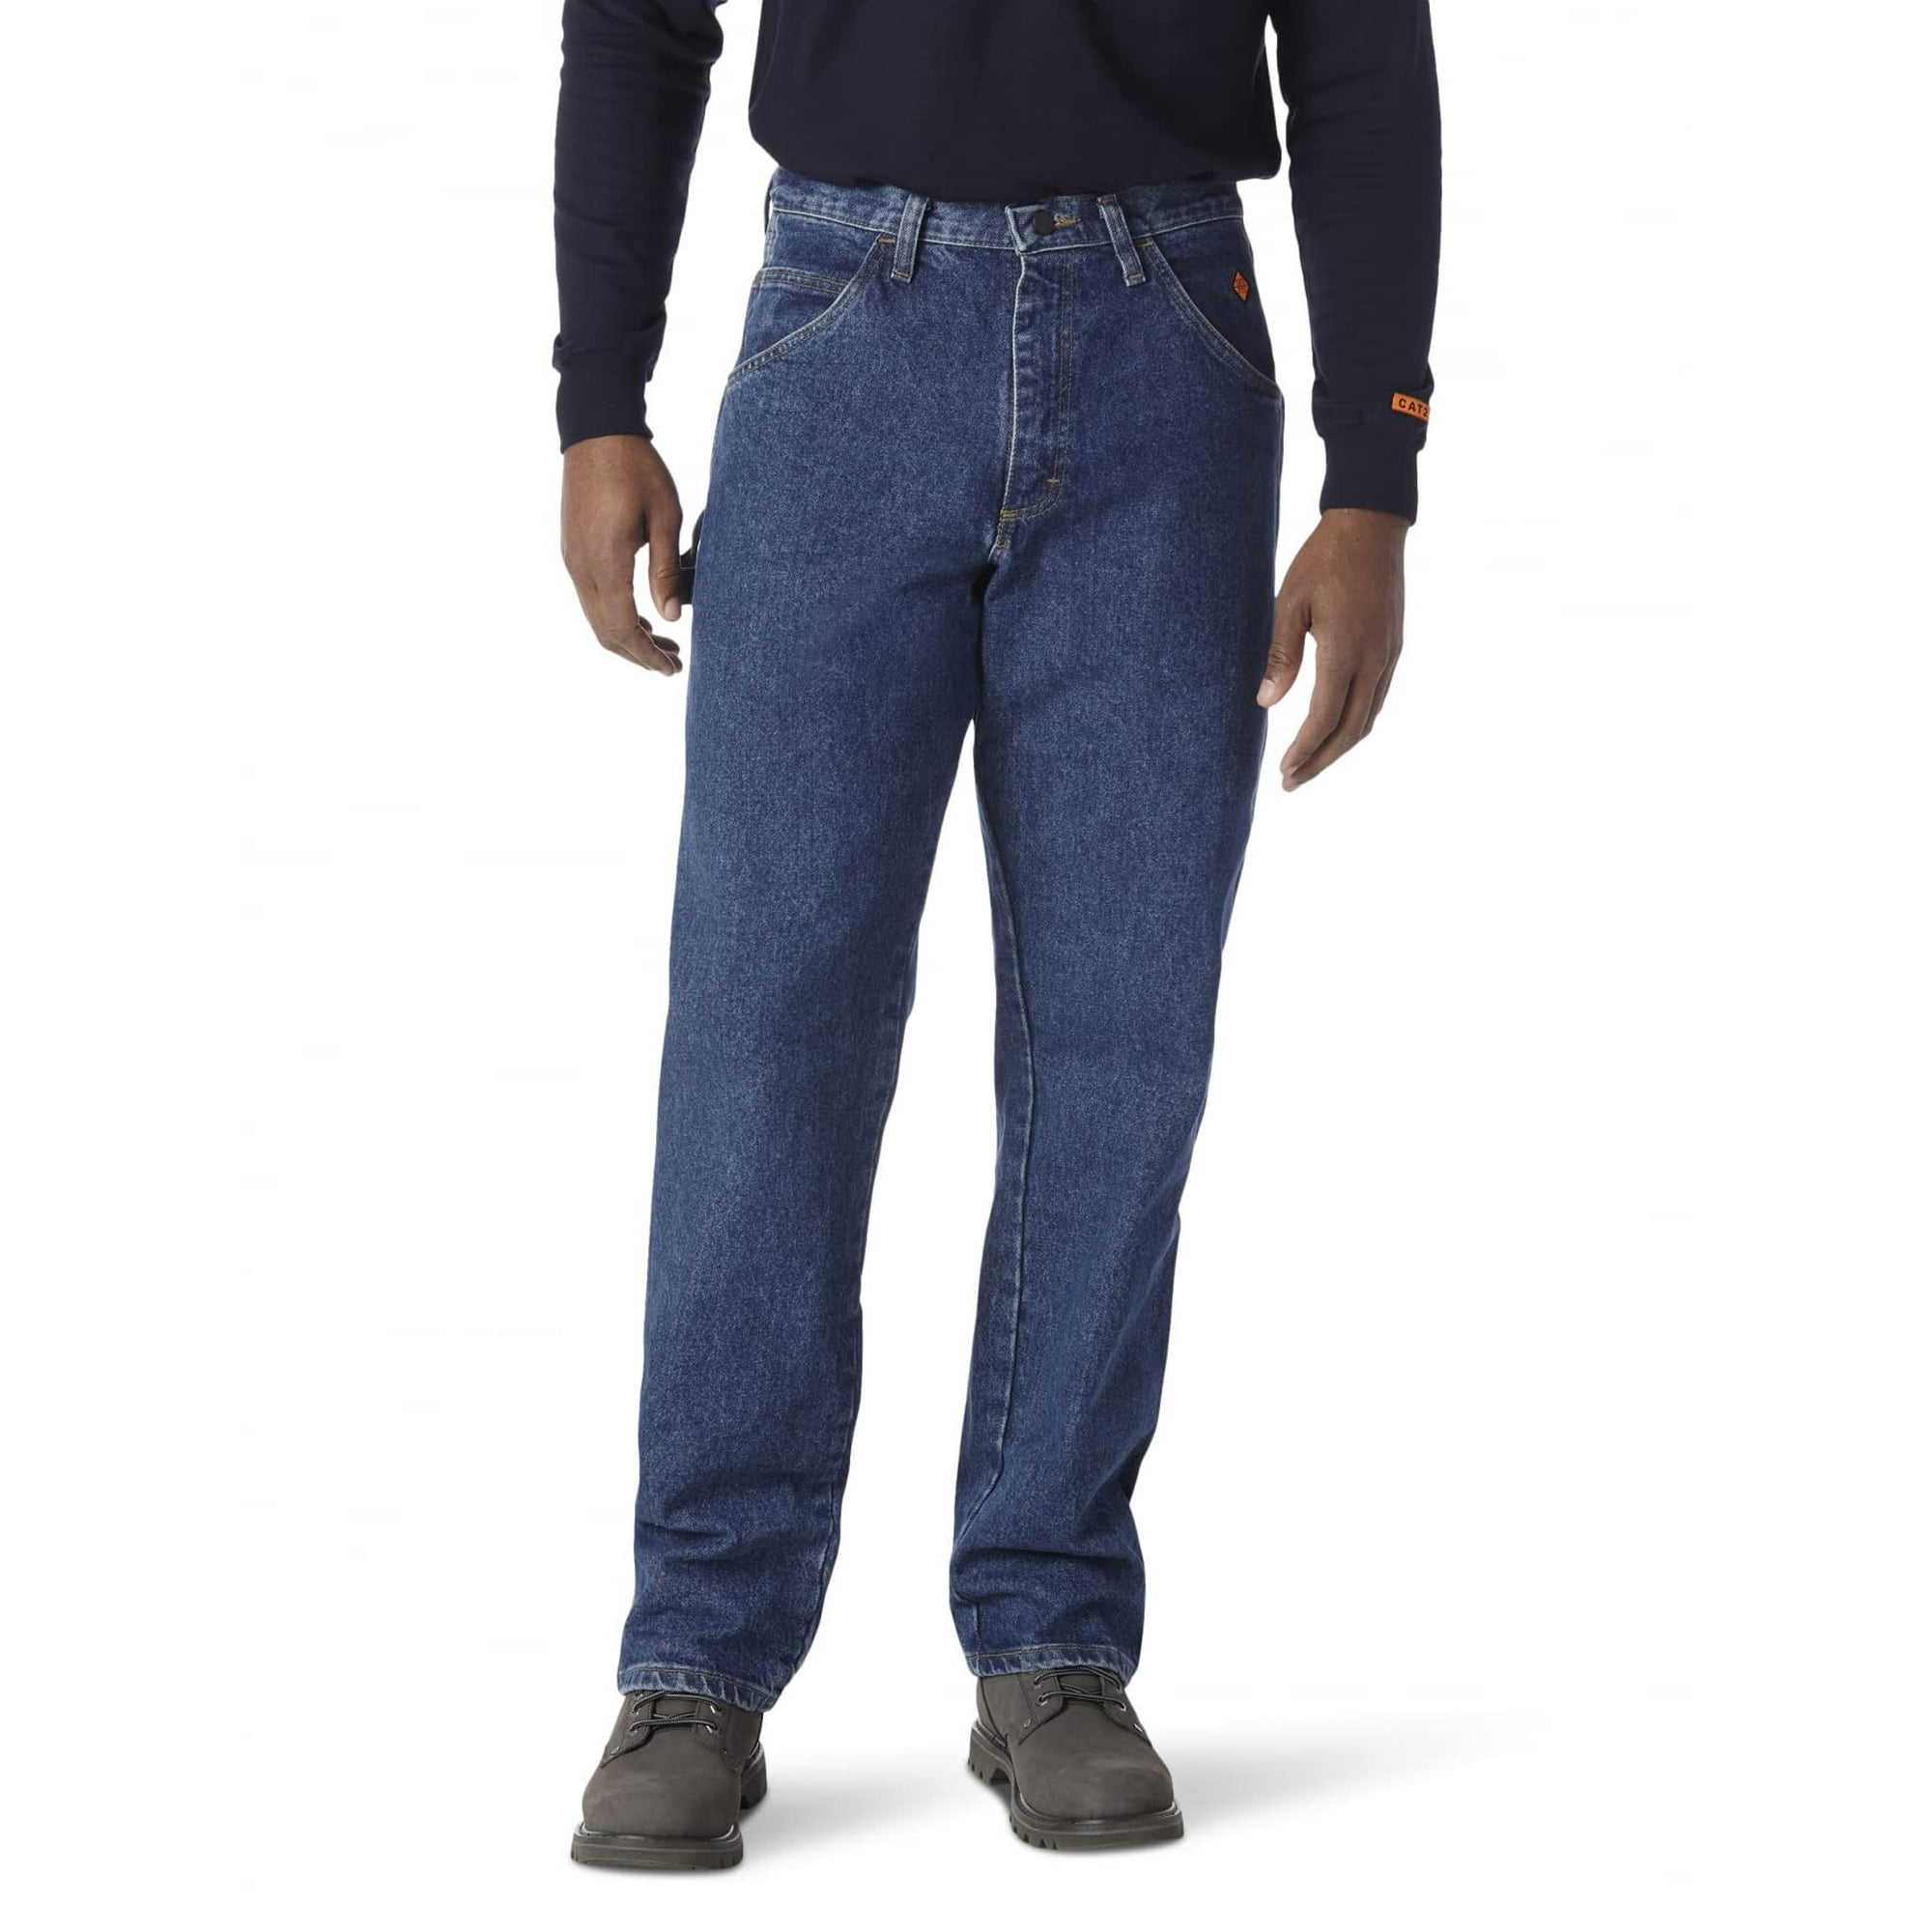 Wrangler Men's Riggs Workwear Flame Resistant Carpenter Jean, Denim, 32x34  | Walmart Canada